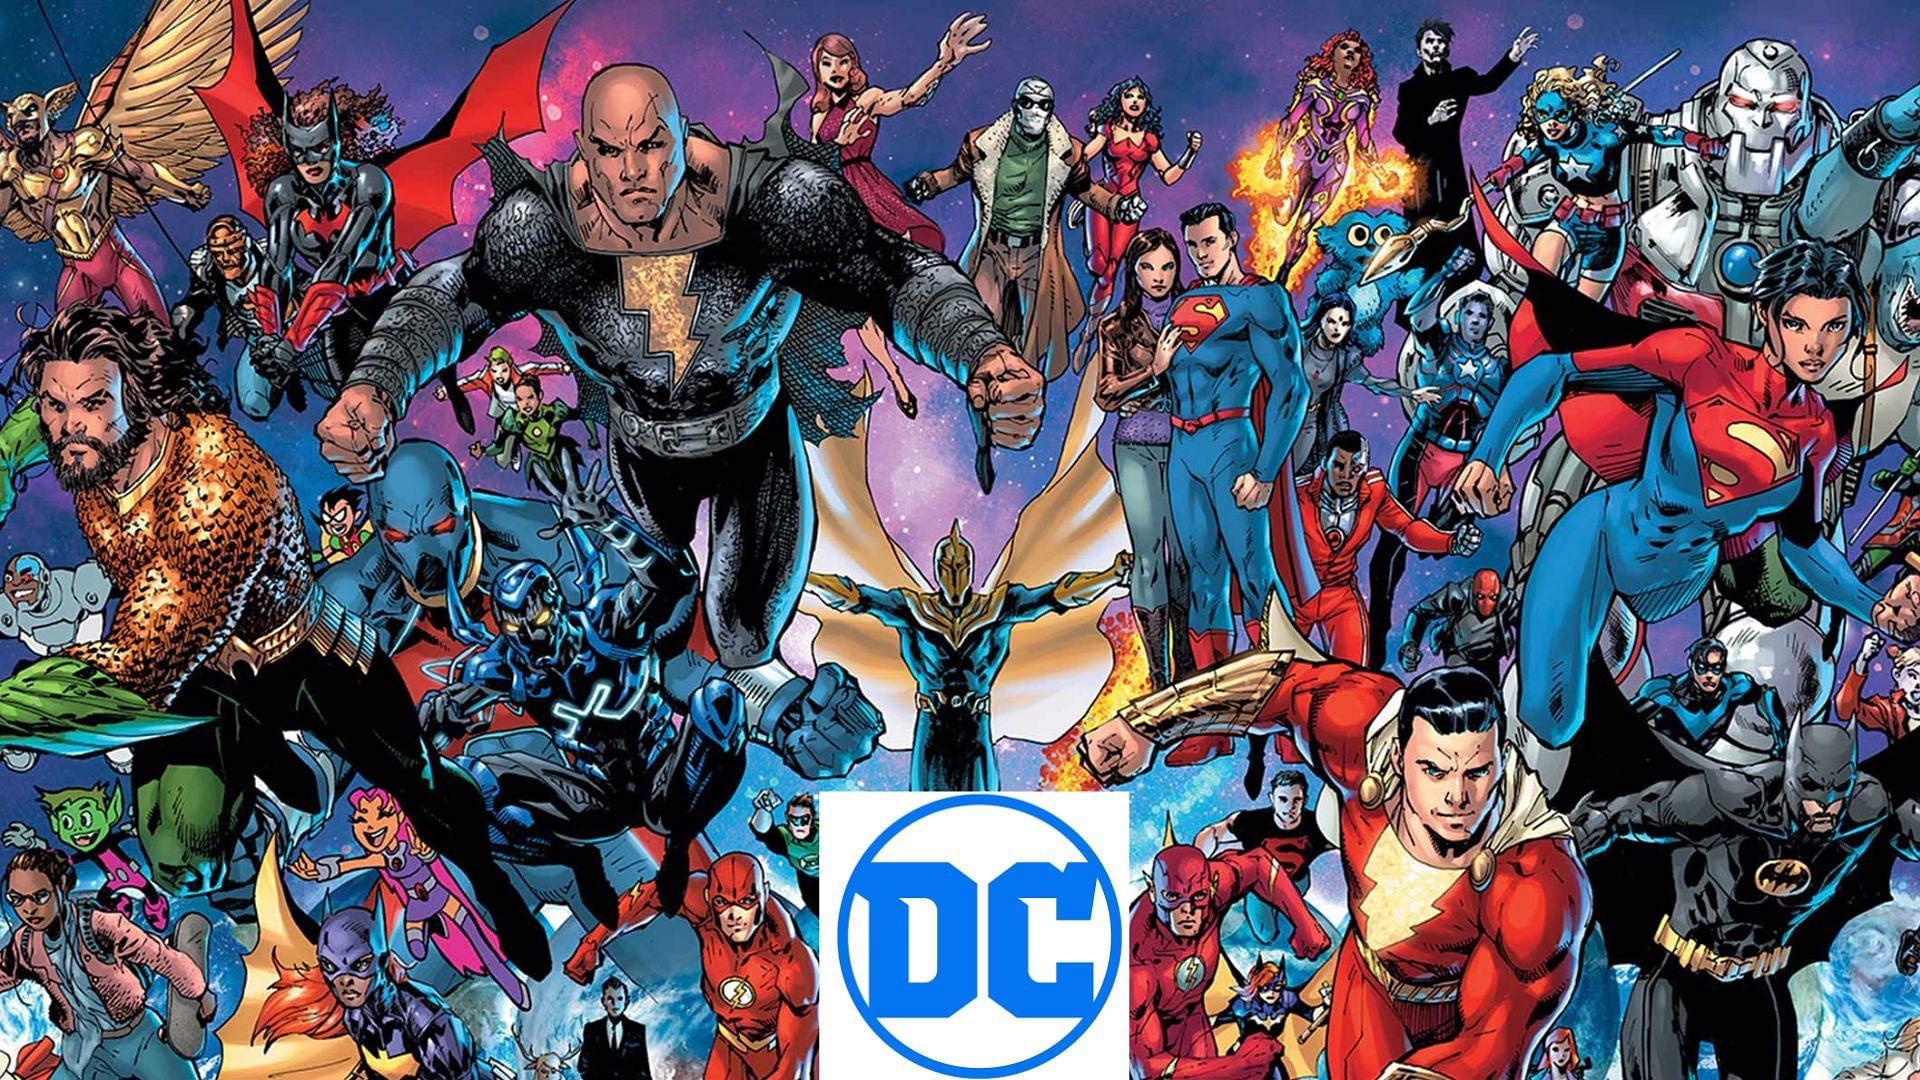 DC animated movies in order ডিসি এর এ পর্যন্ত release হওয়া সব এনিমেটেড মুভি সালসহ